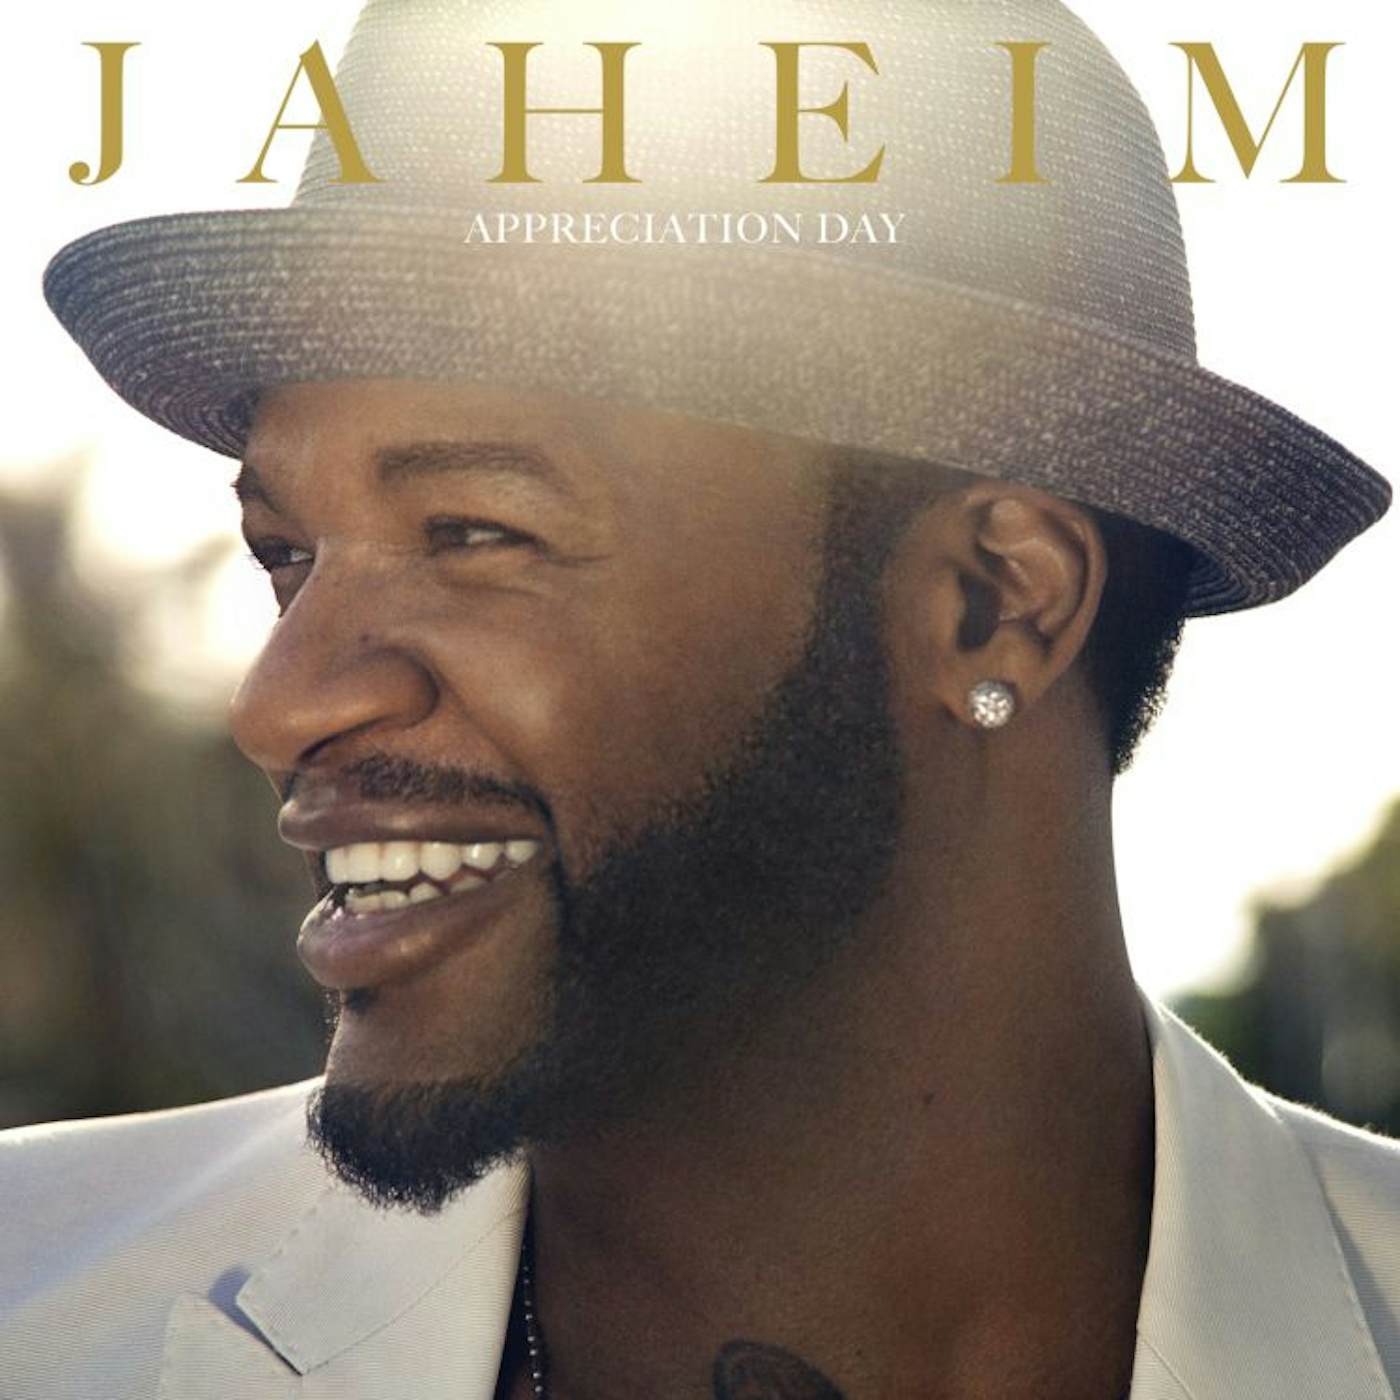 Jaheim Appreciation Day (CD)